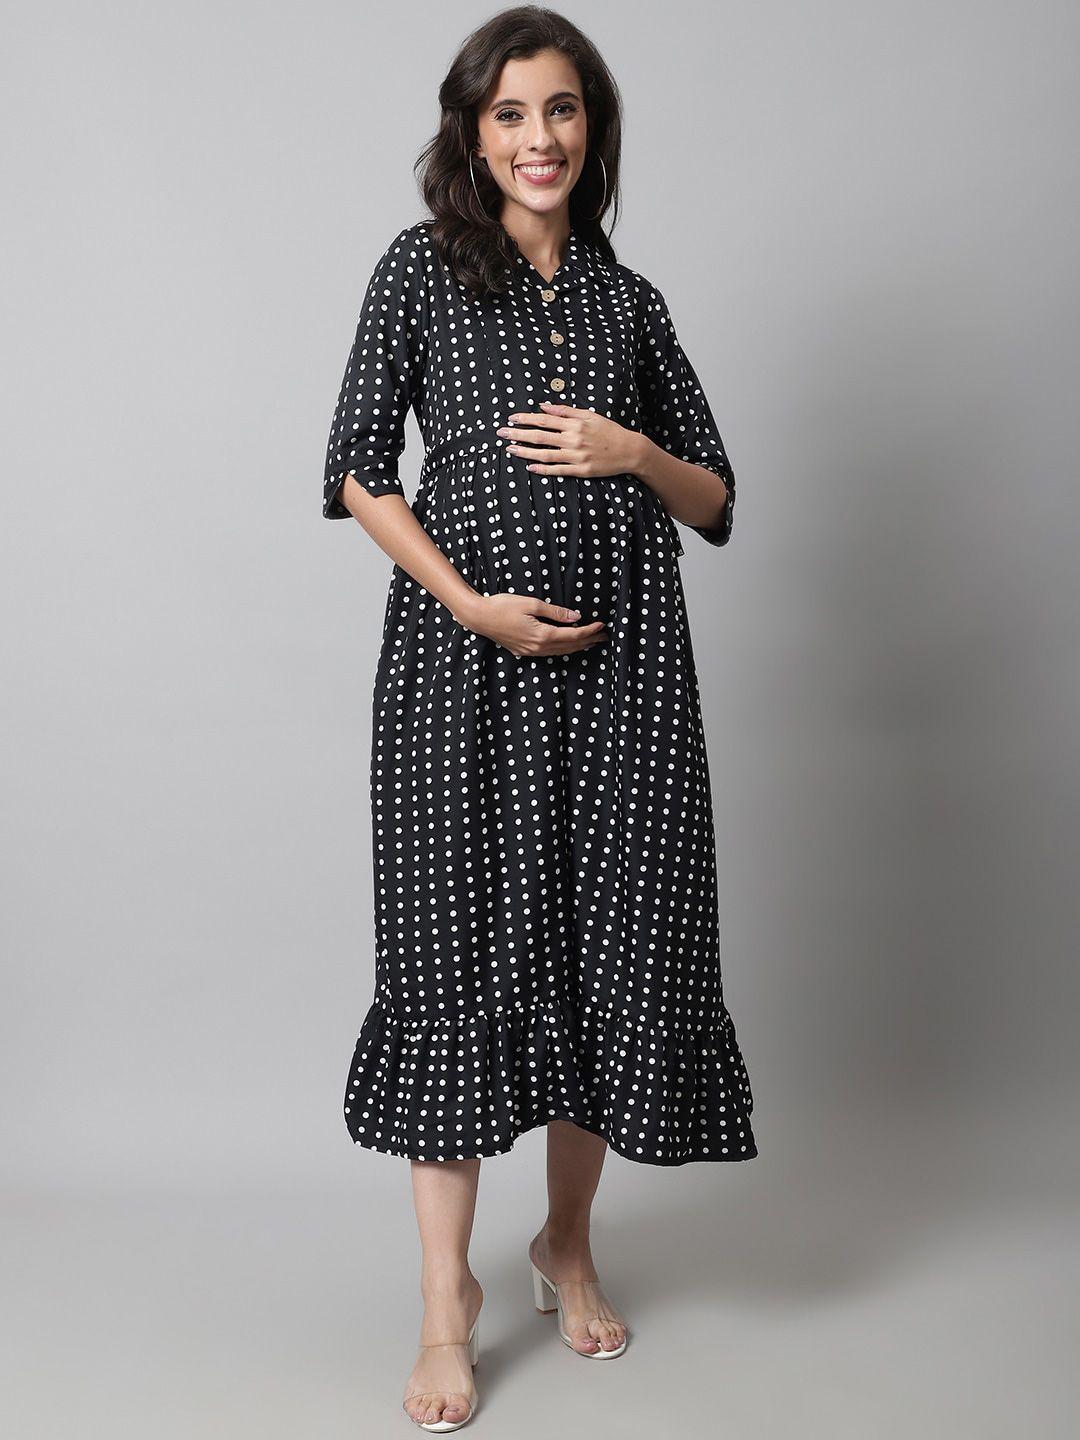 frempy maternity maxi dress